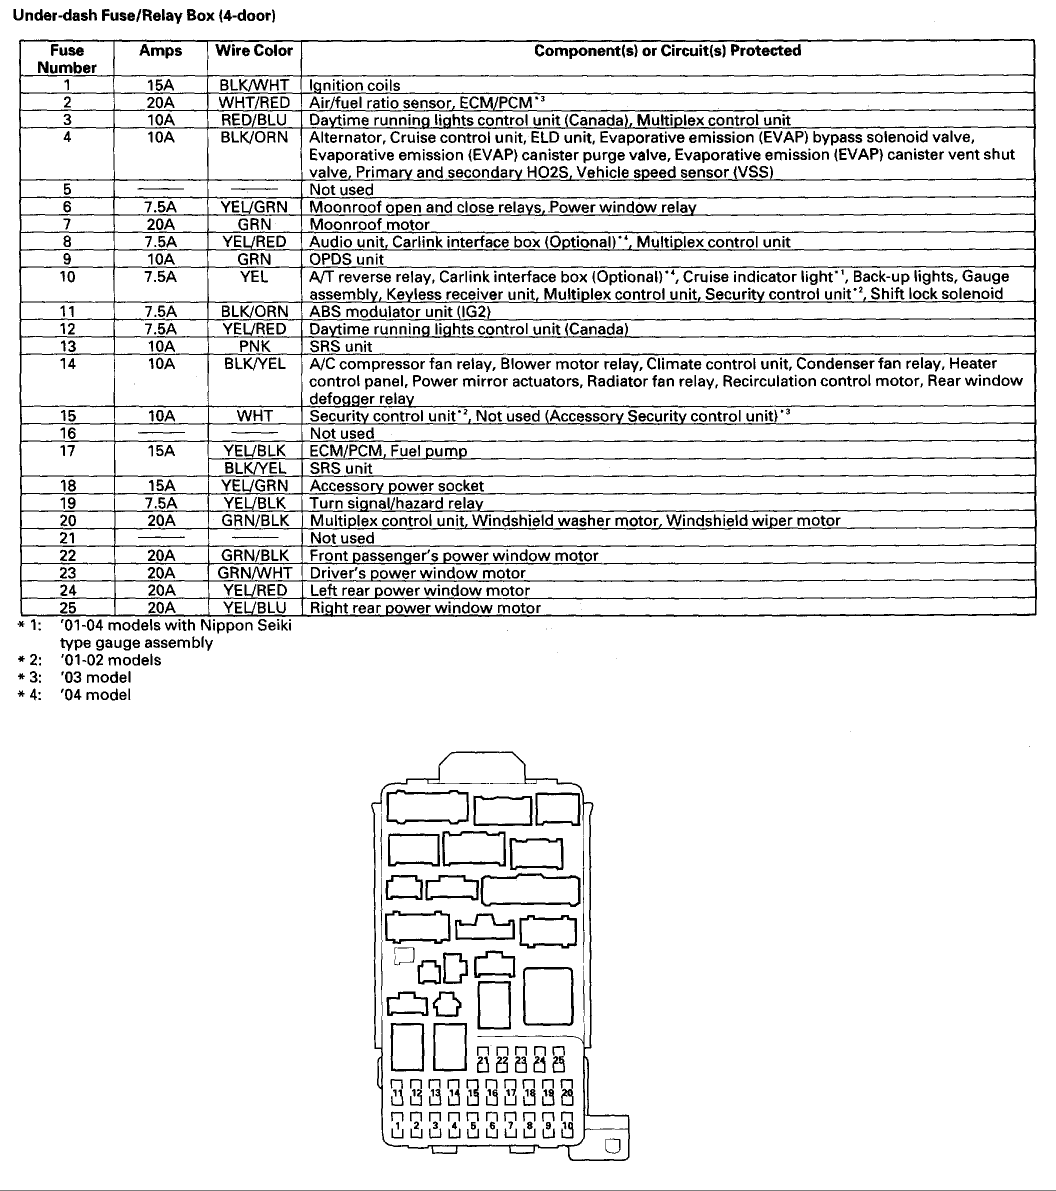 02 Honda Civic Fuse Box Diagram